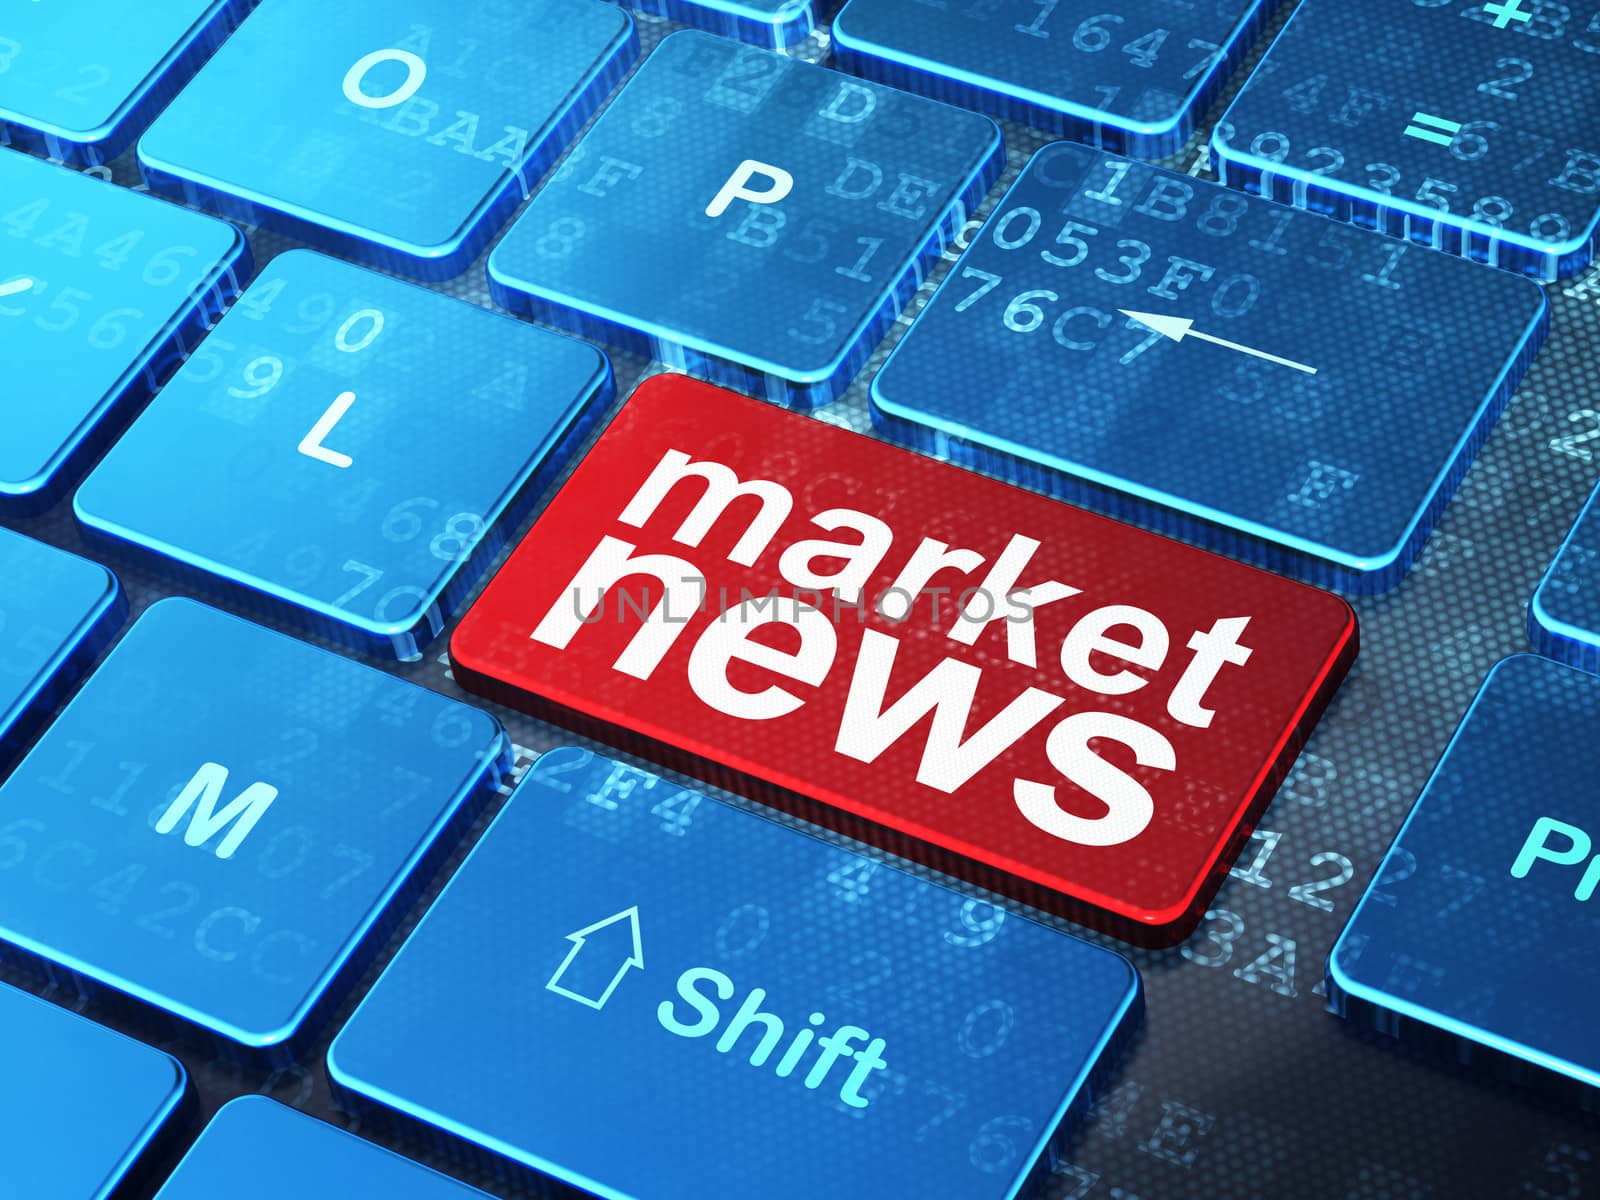 News concept: Market News on computer keyboard background by maxkabakov